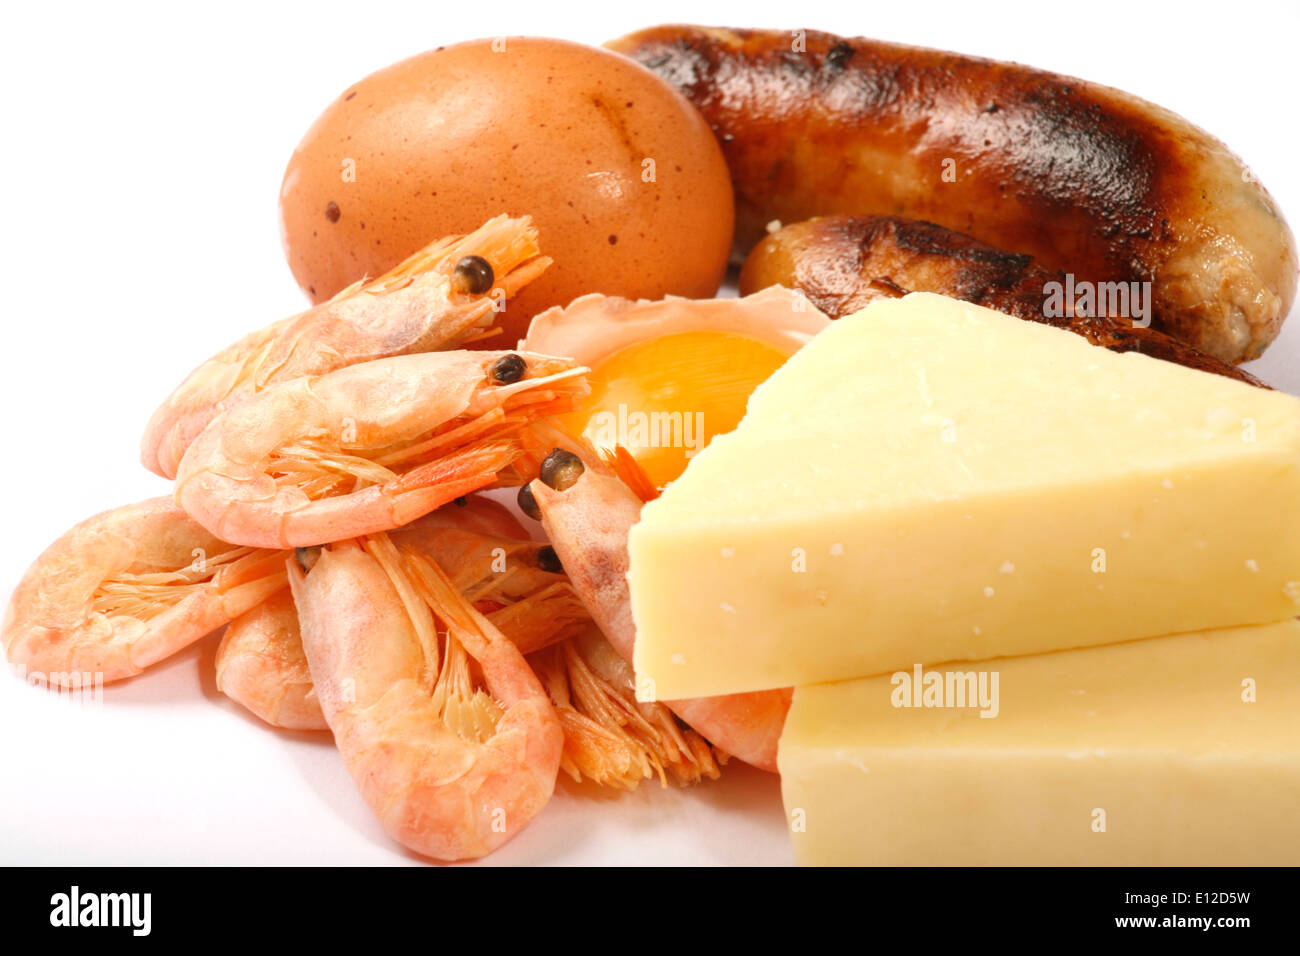 Cholesterinreiche Lebensmittel Stockfoto